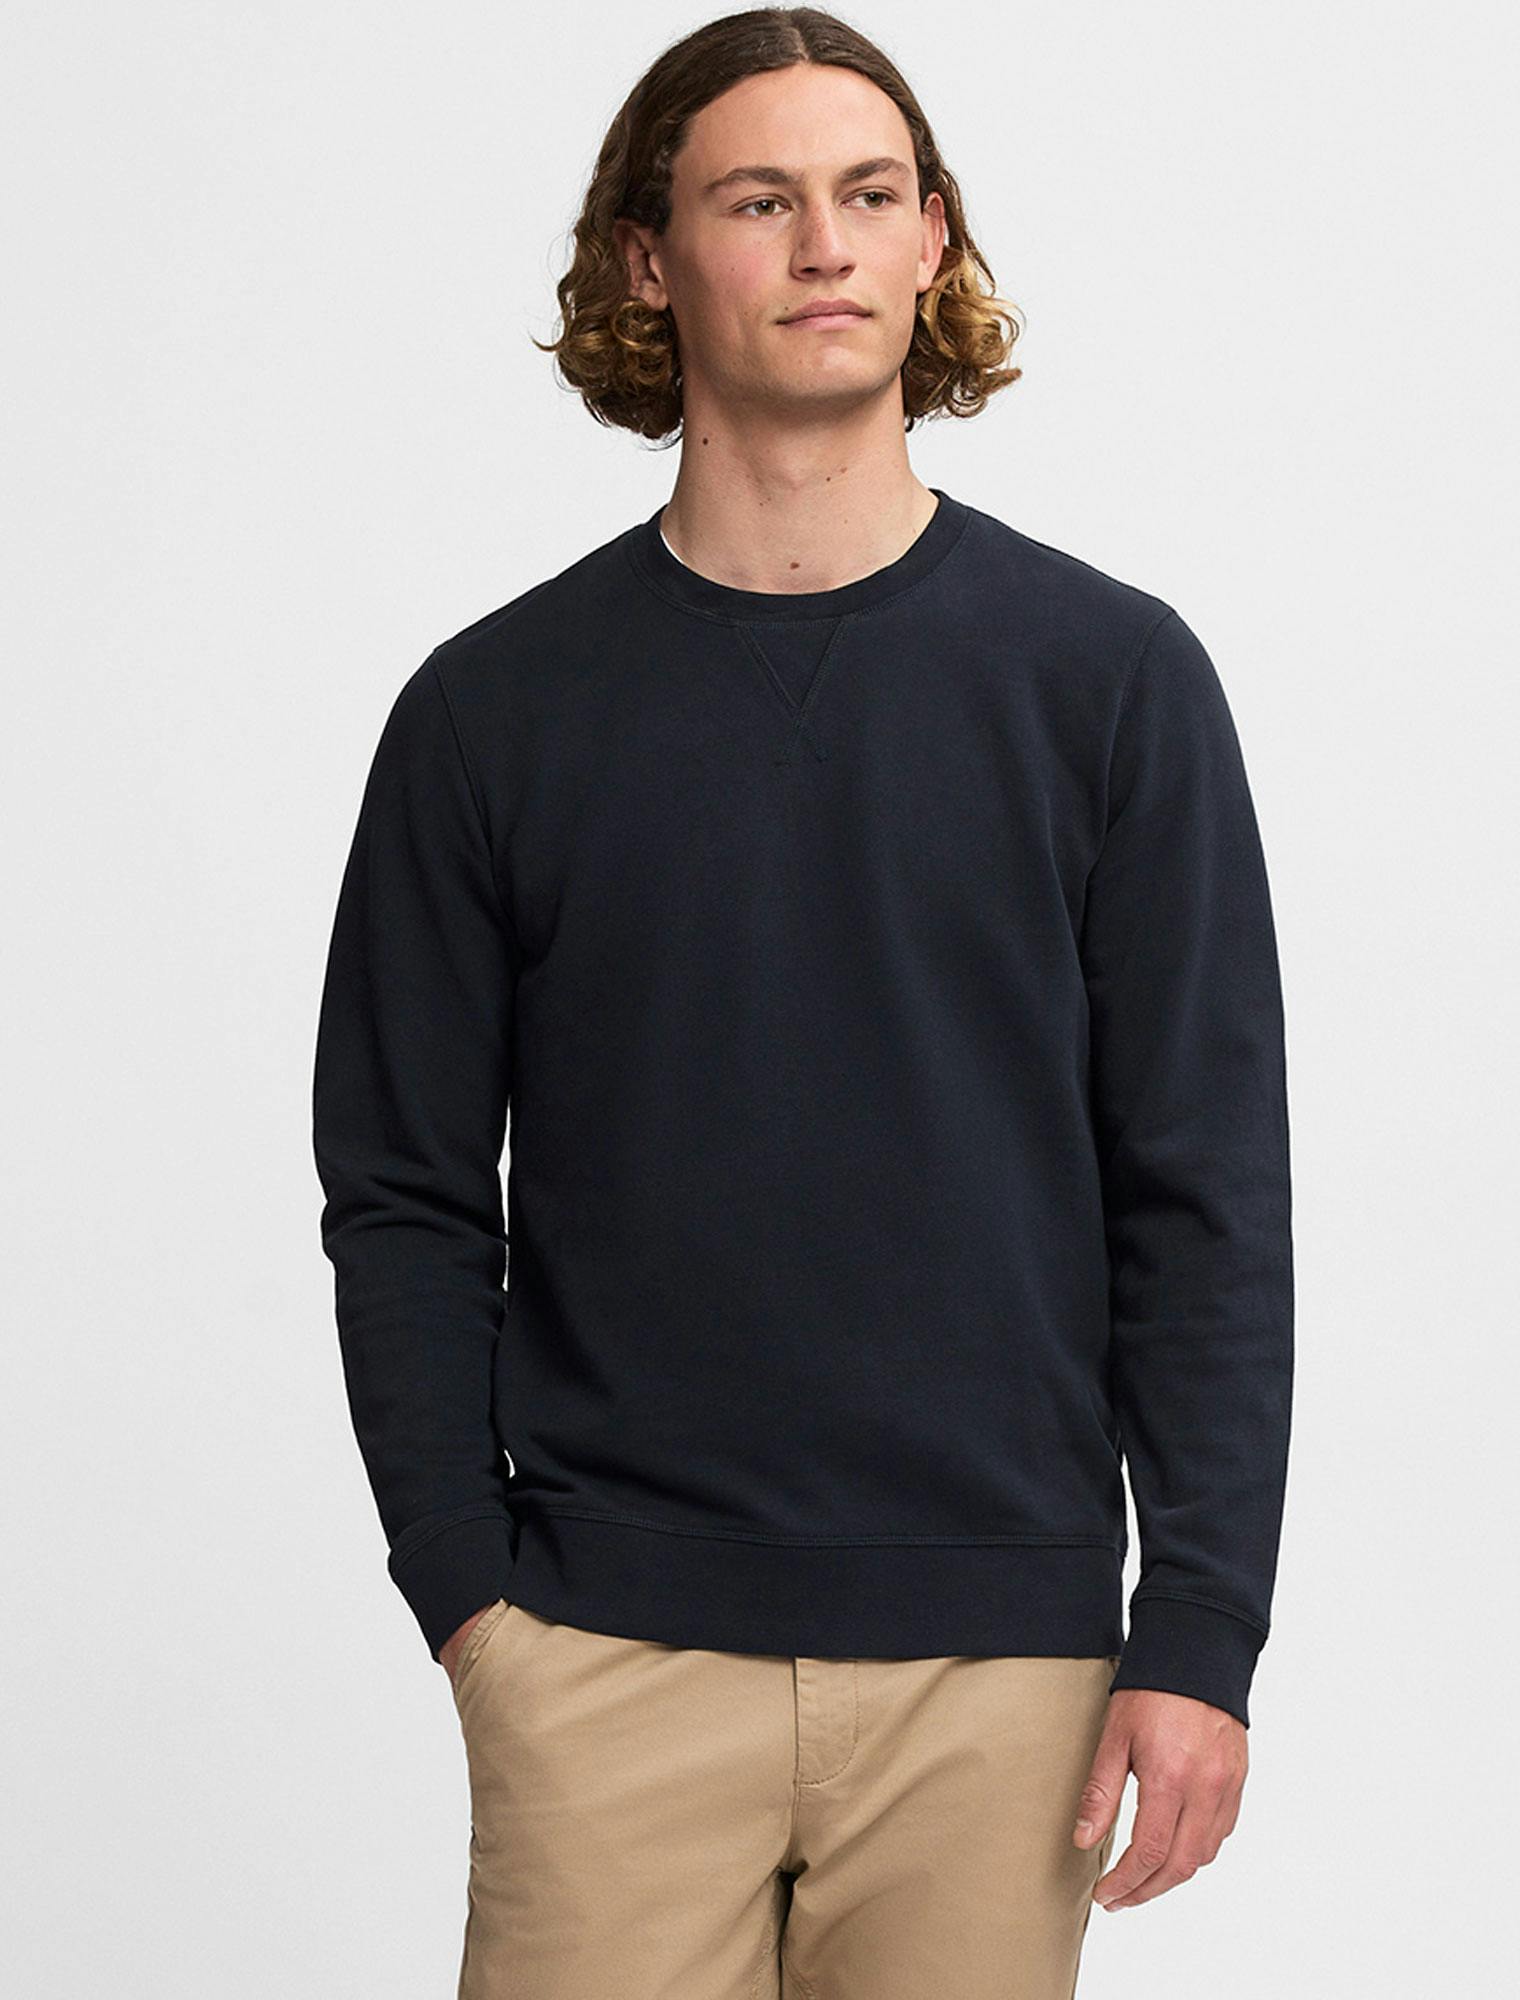 Navy Blue Sweater – Unisex Crewneck Jumper